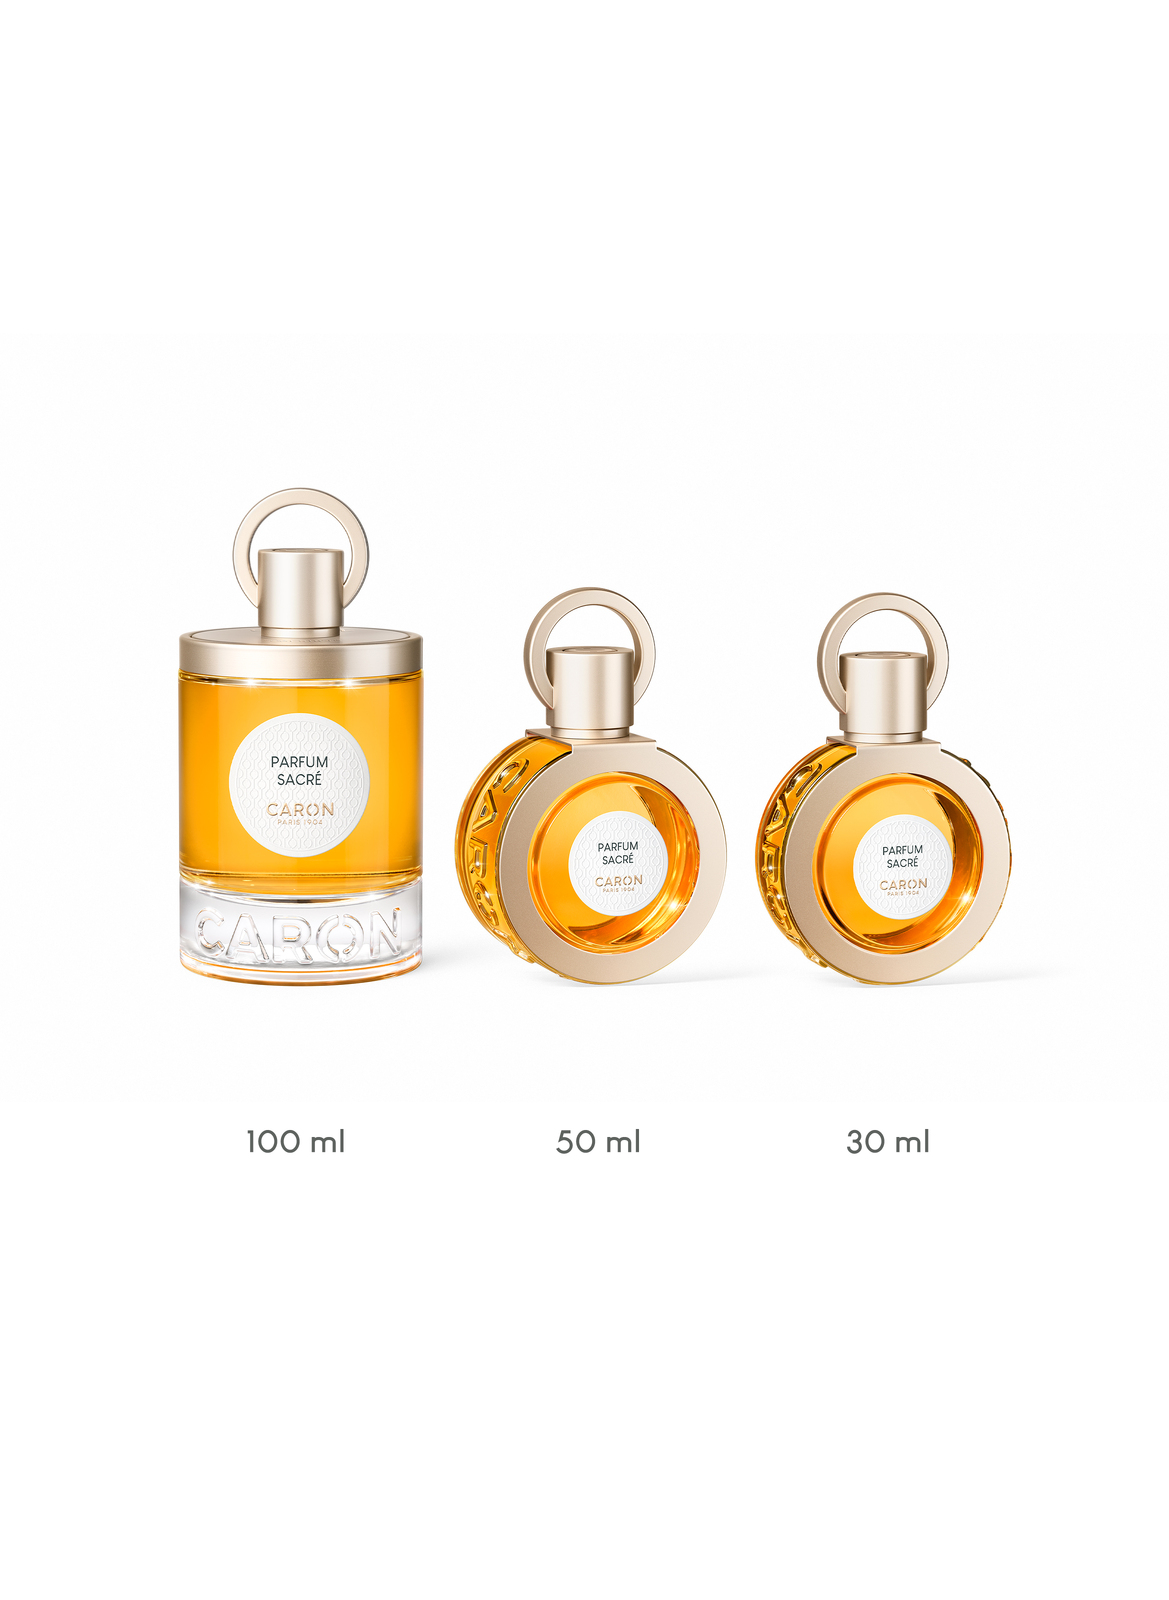 CARON Parfum Sacre EDP 100ml Refillable